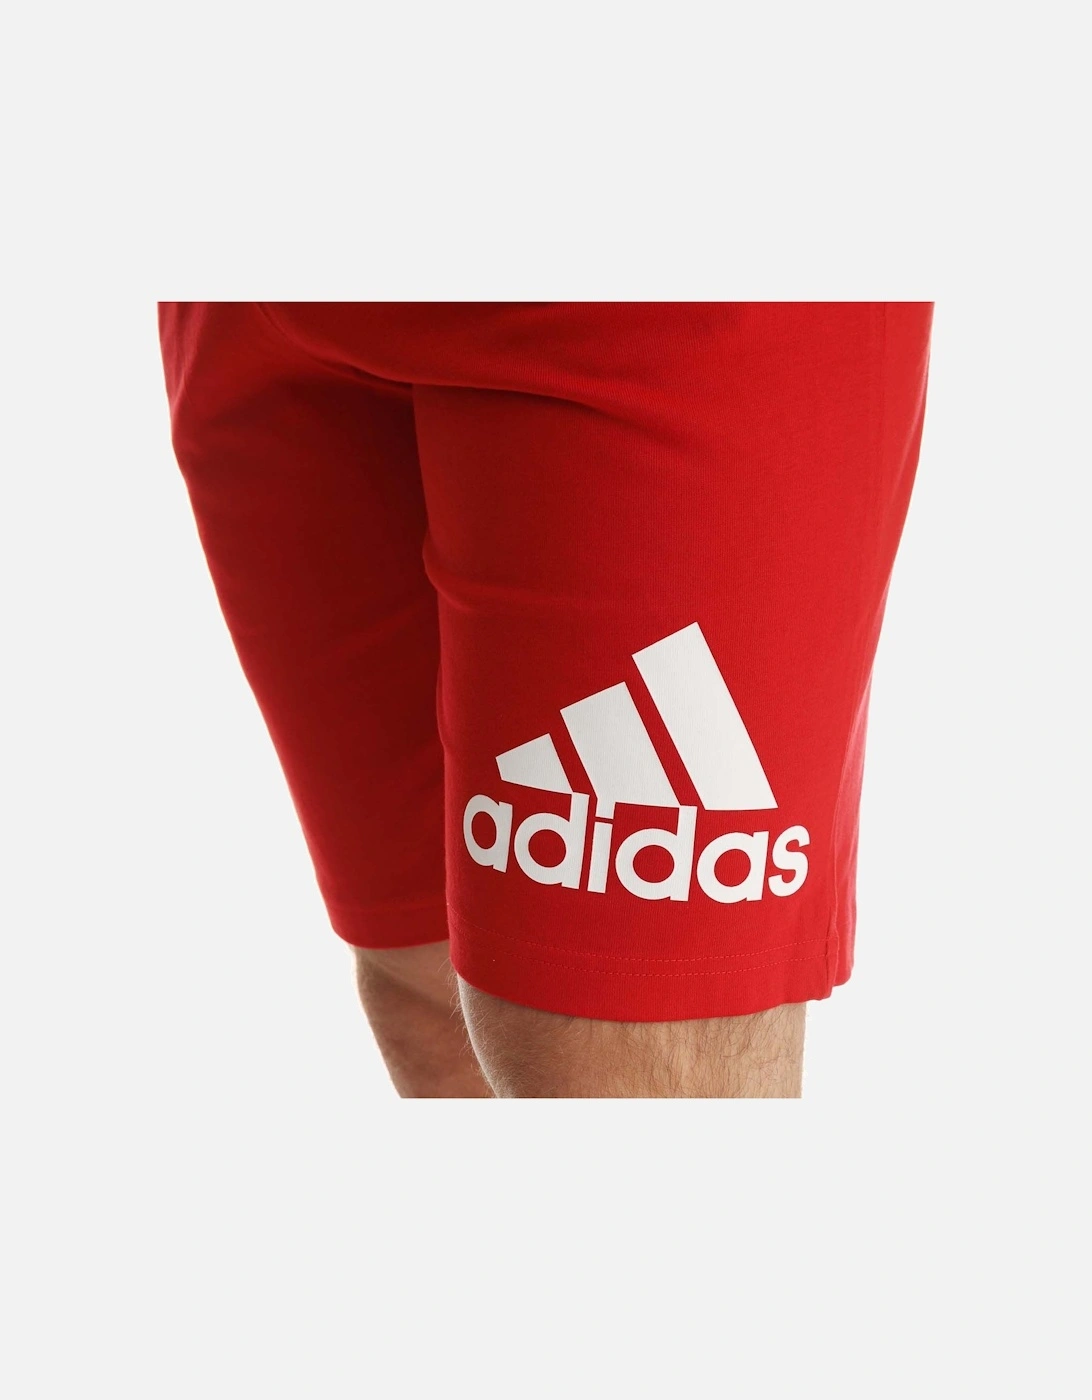 Boys Essential Big Logo Cotton Shorts